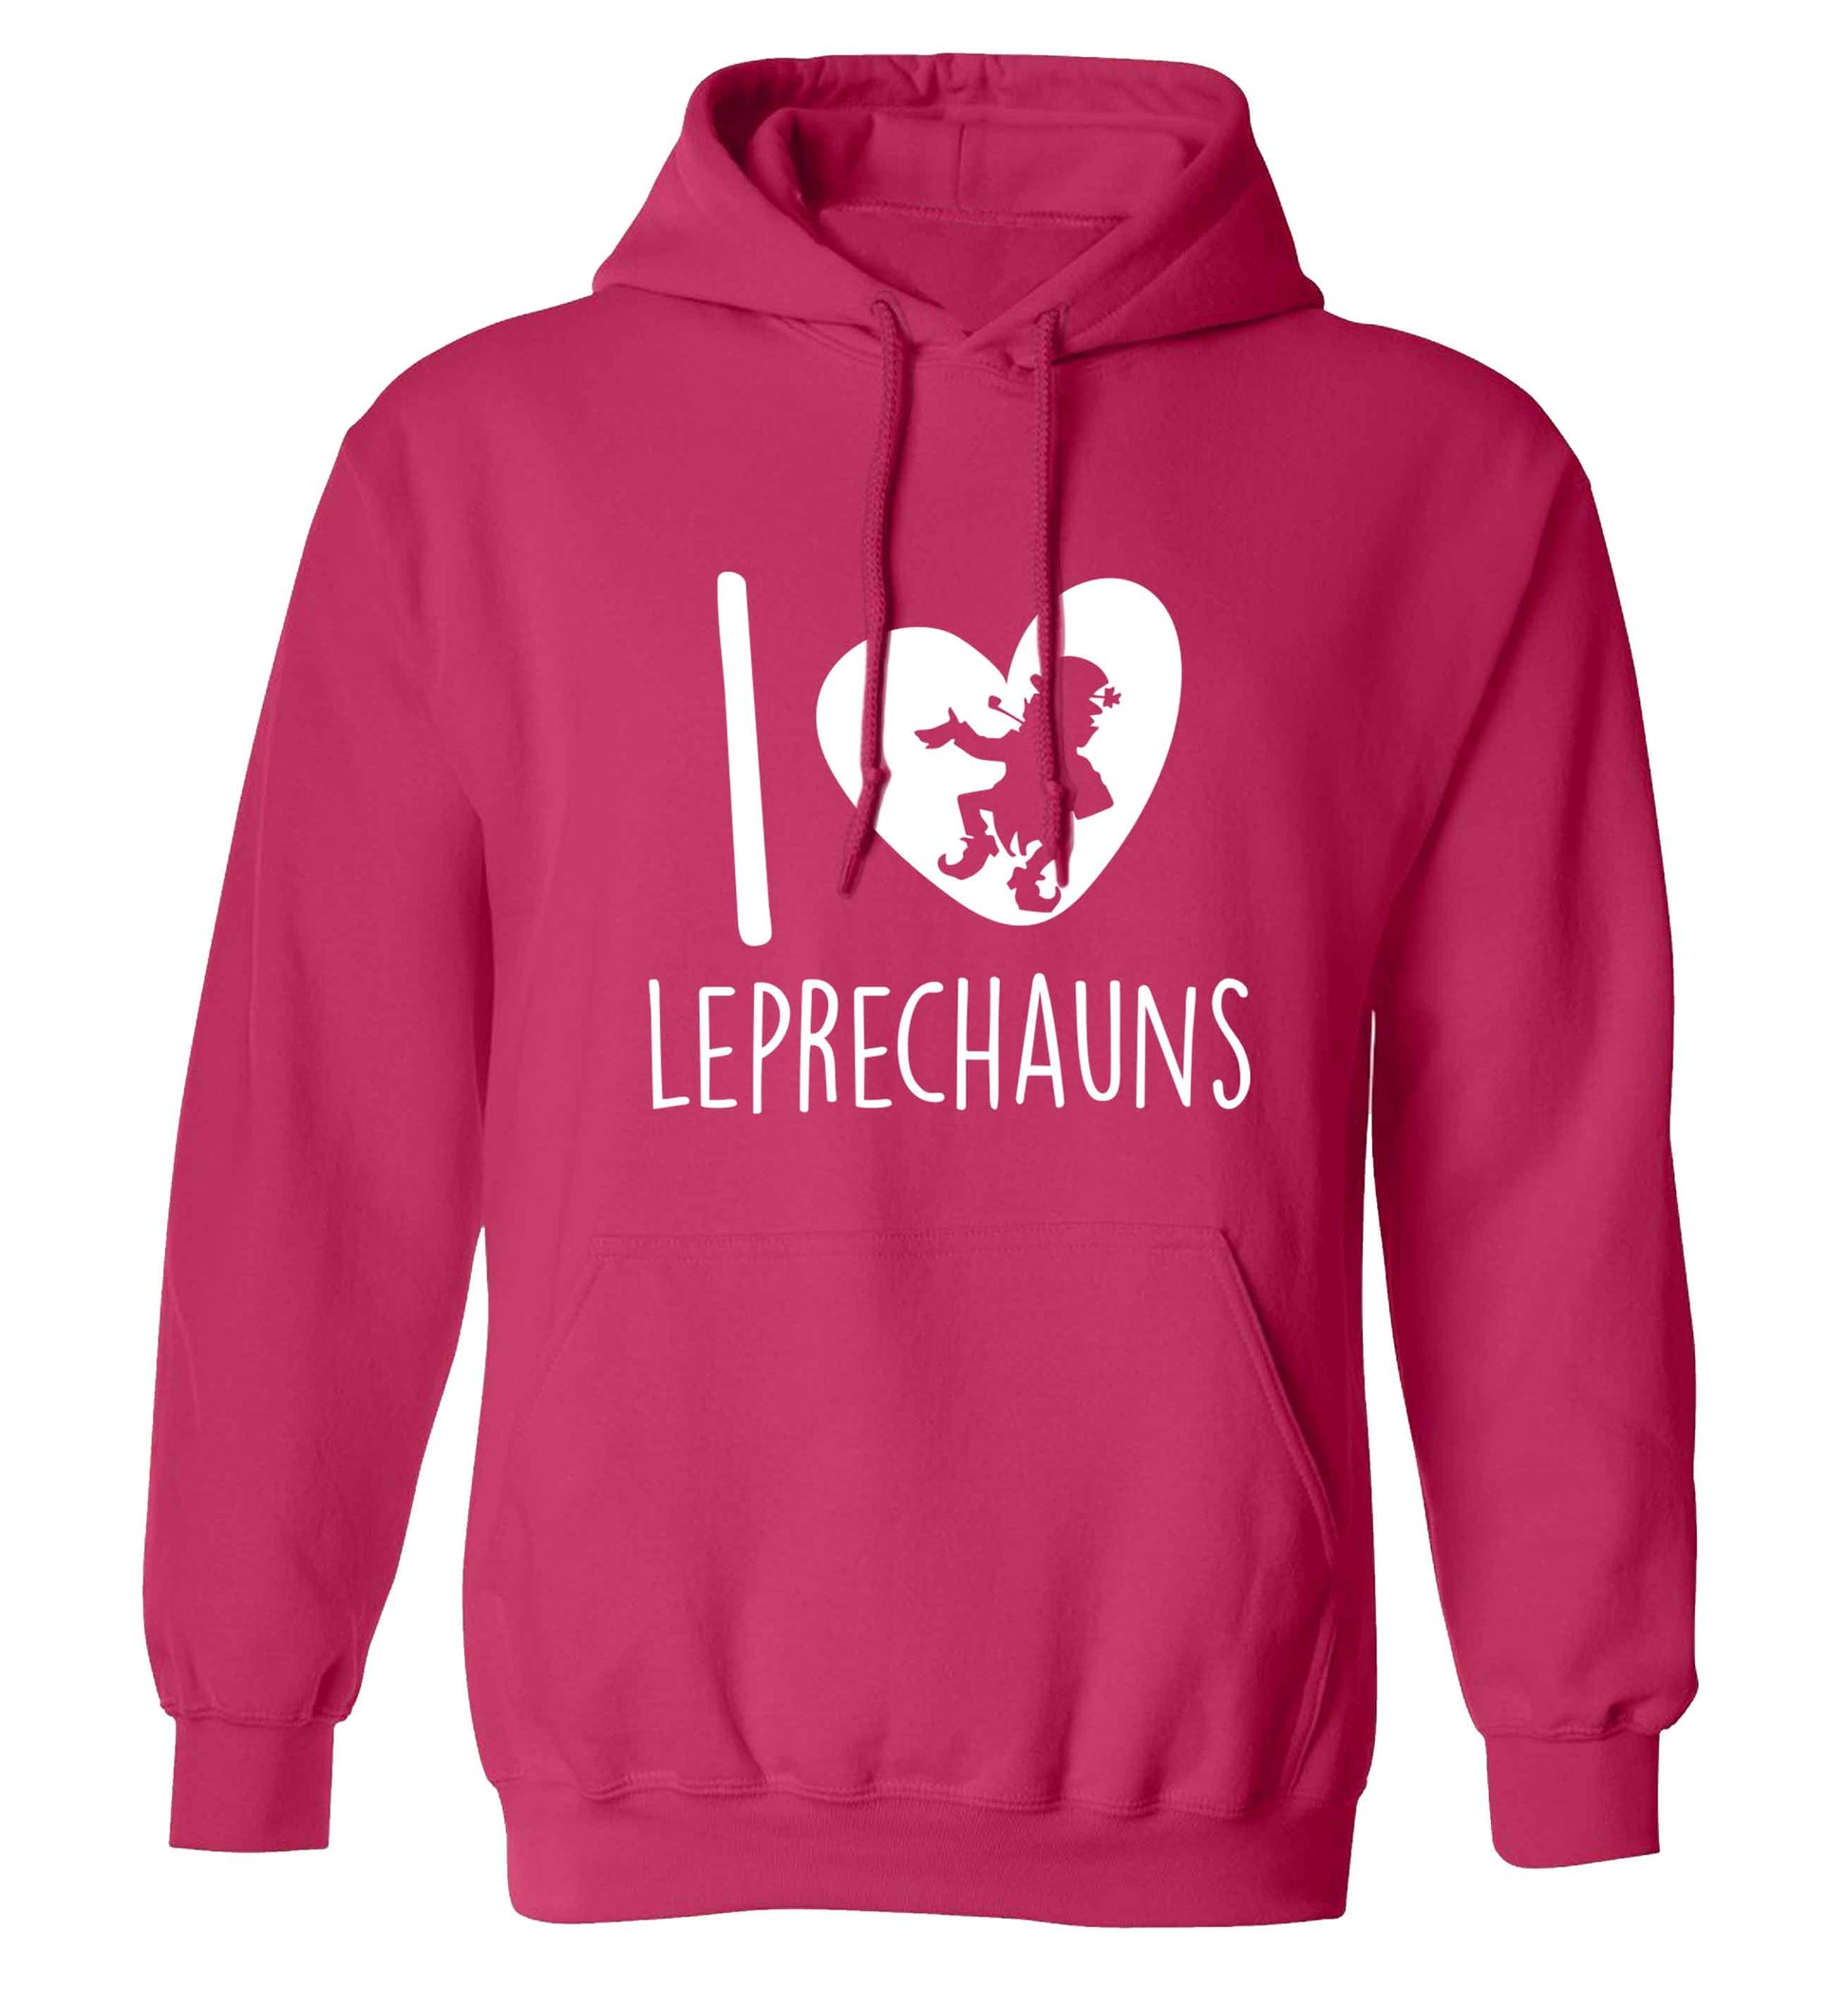 I love leprechauns adults unisex pink hoodie 2XL